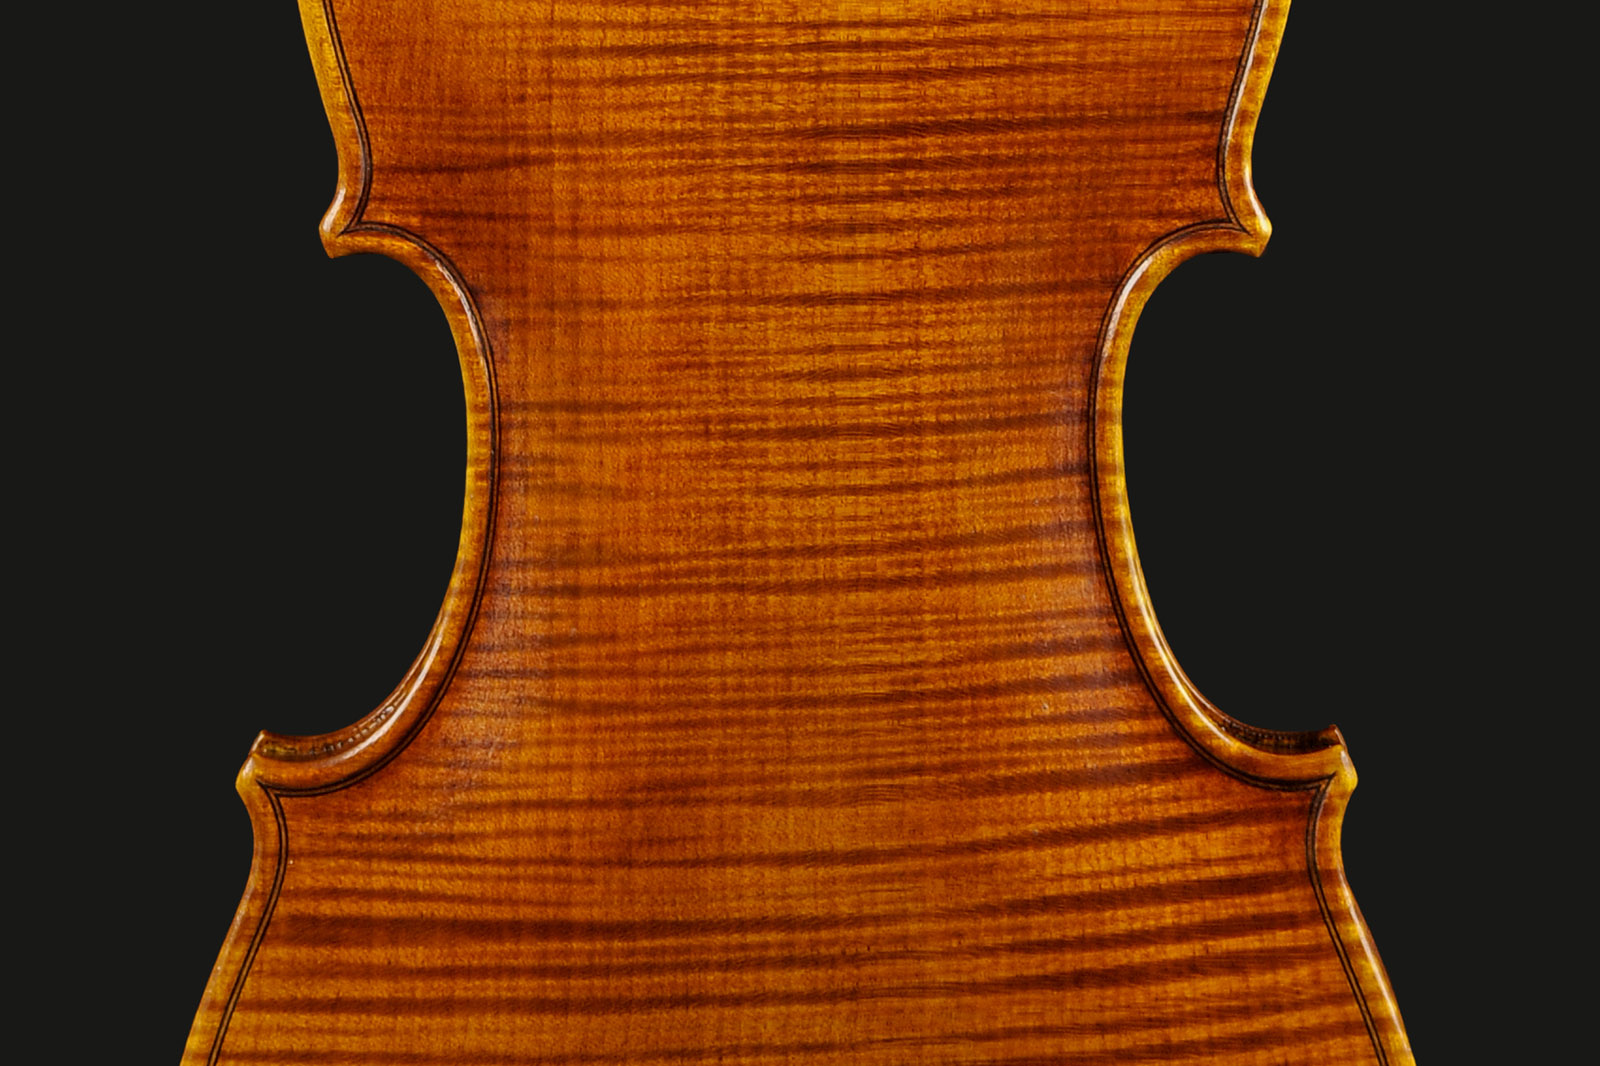 Antonio Stradivari Cremona 1715 “San Pietro“ - Image 3